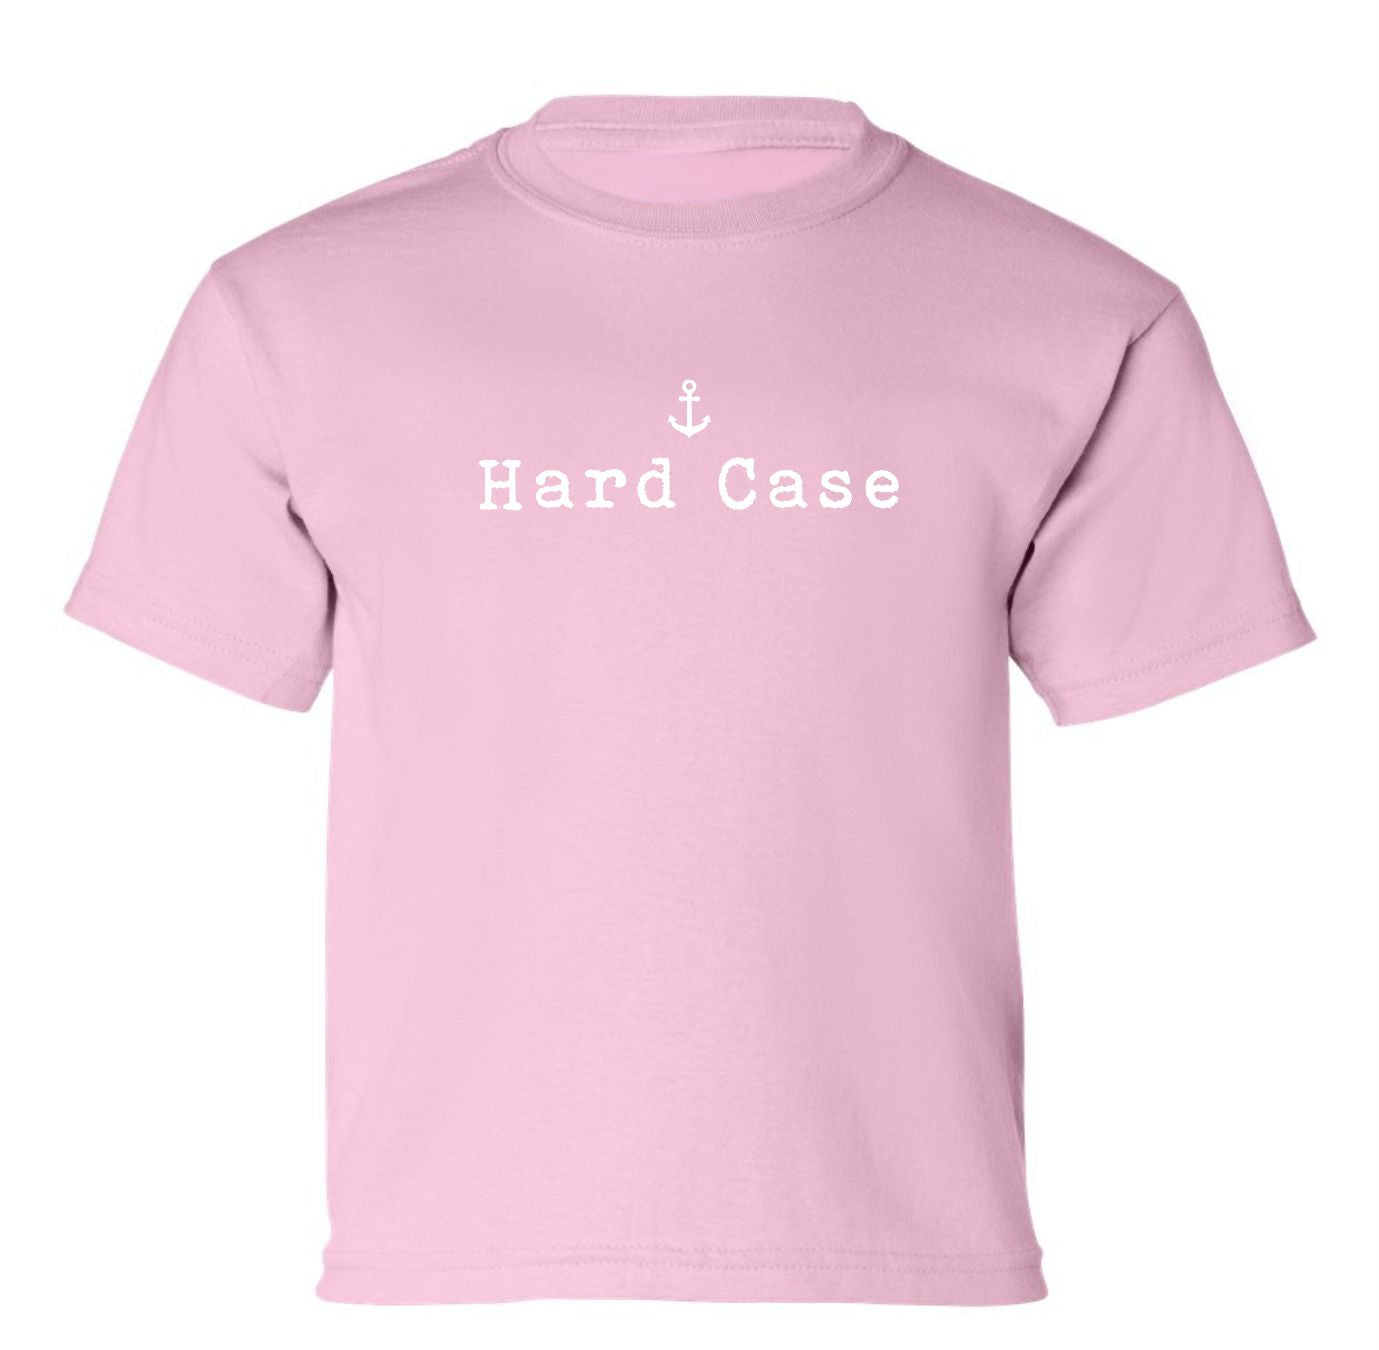 "Hard Case" Toddler/Youth T-Shirt